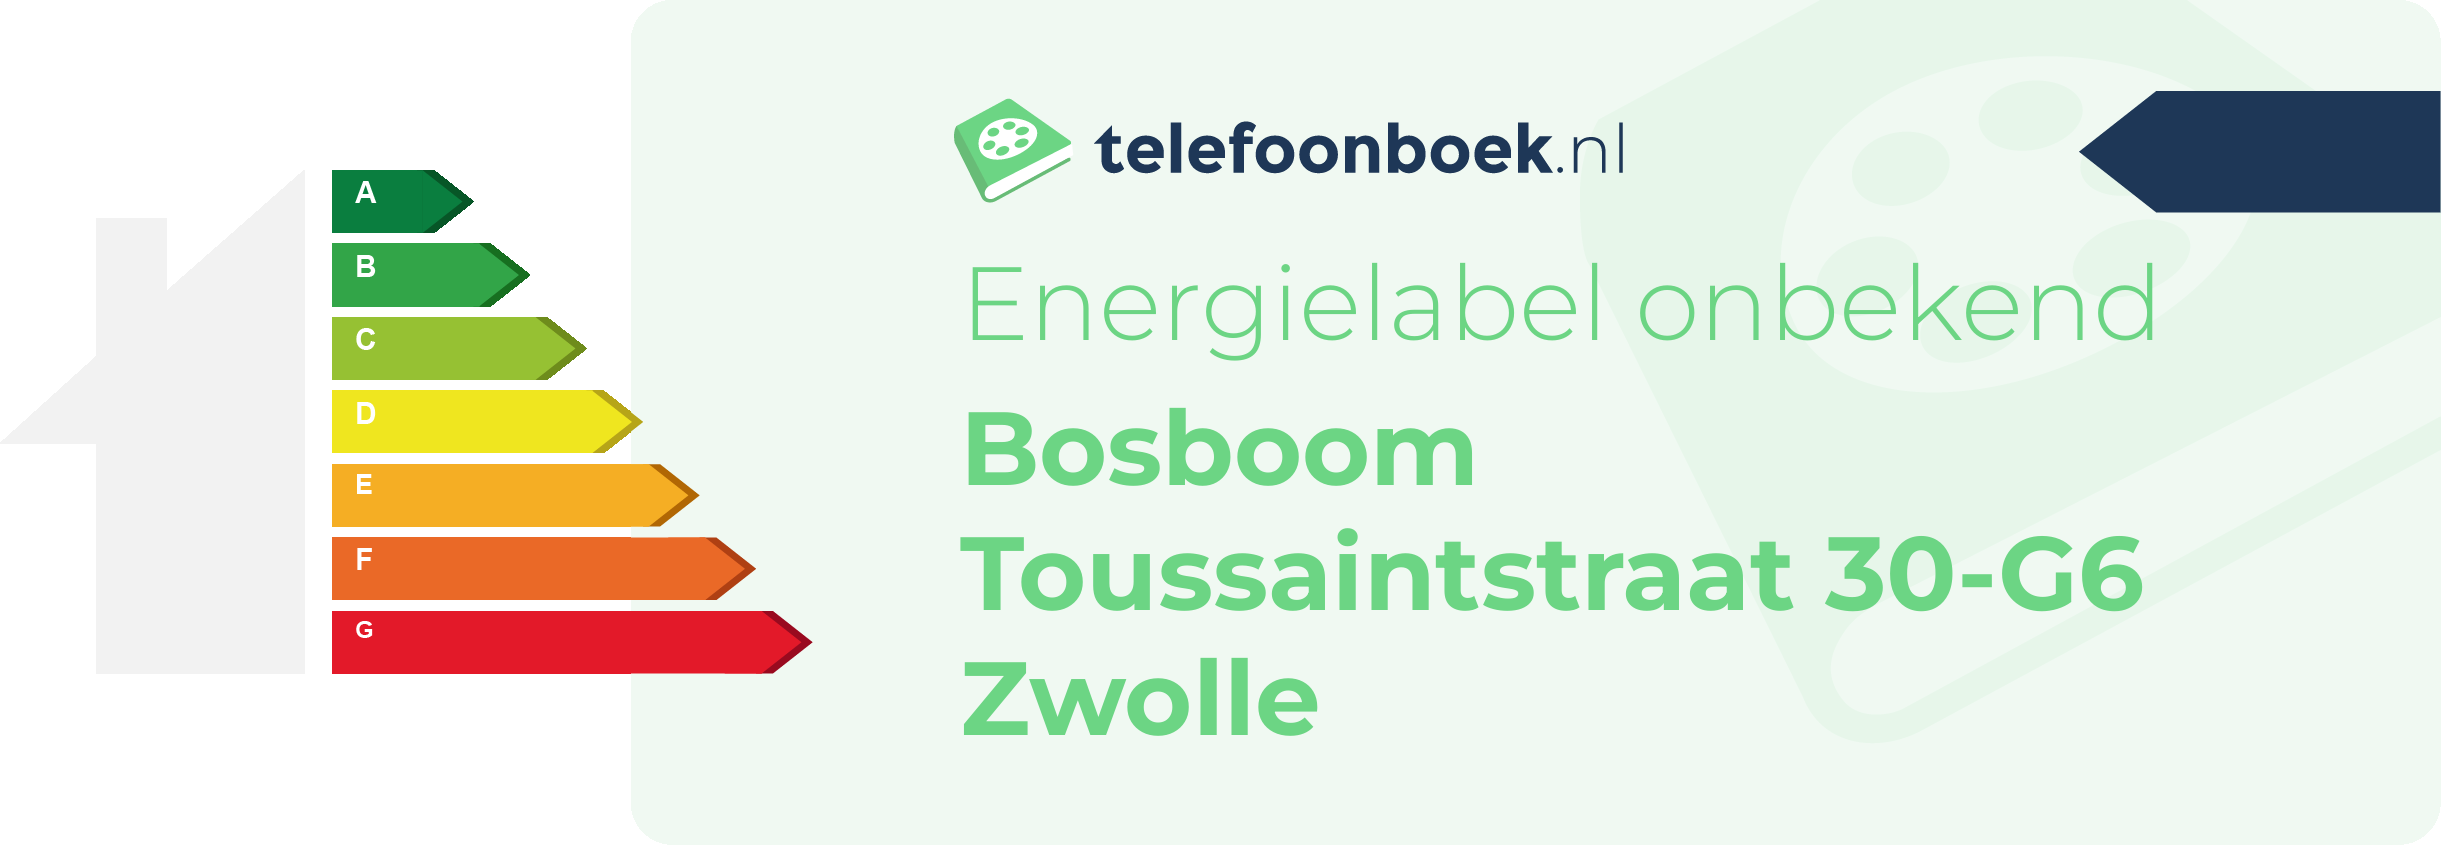 Energielabel Bosboom Toussaintstraat 30-G6 Zwolle